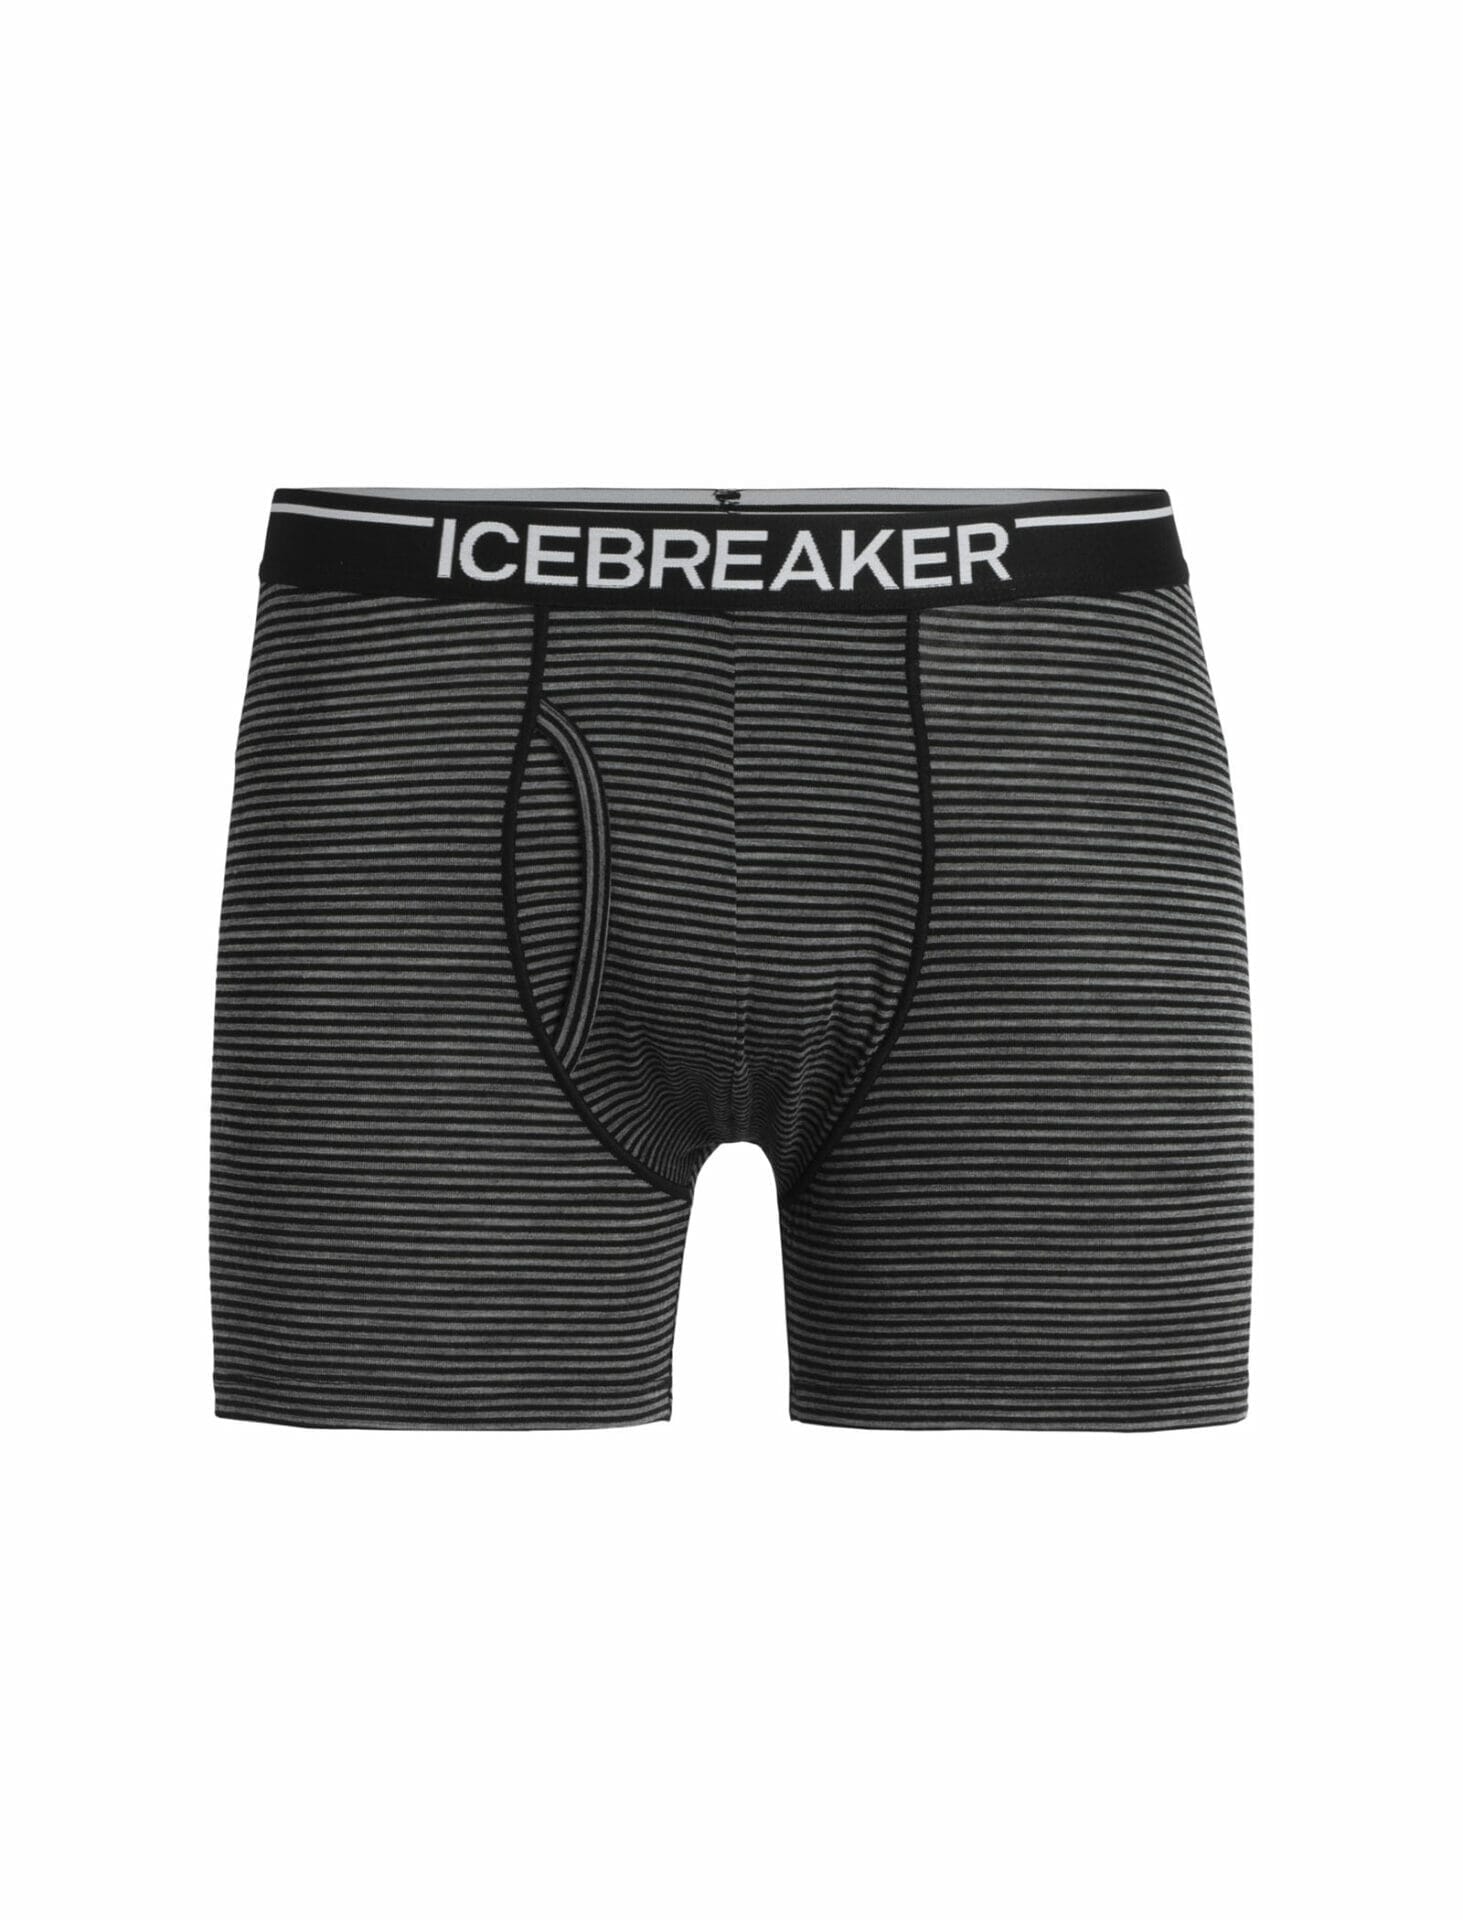 icebreaker Men's Merino Anatomica Boxers wFly